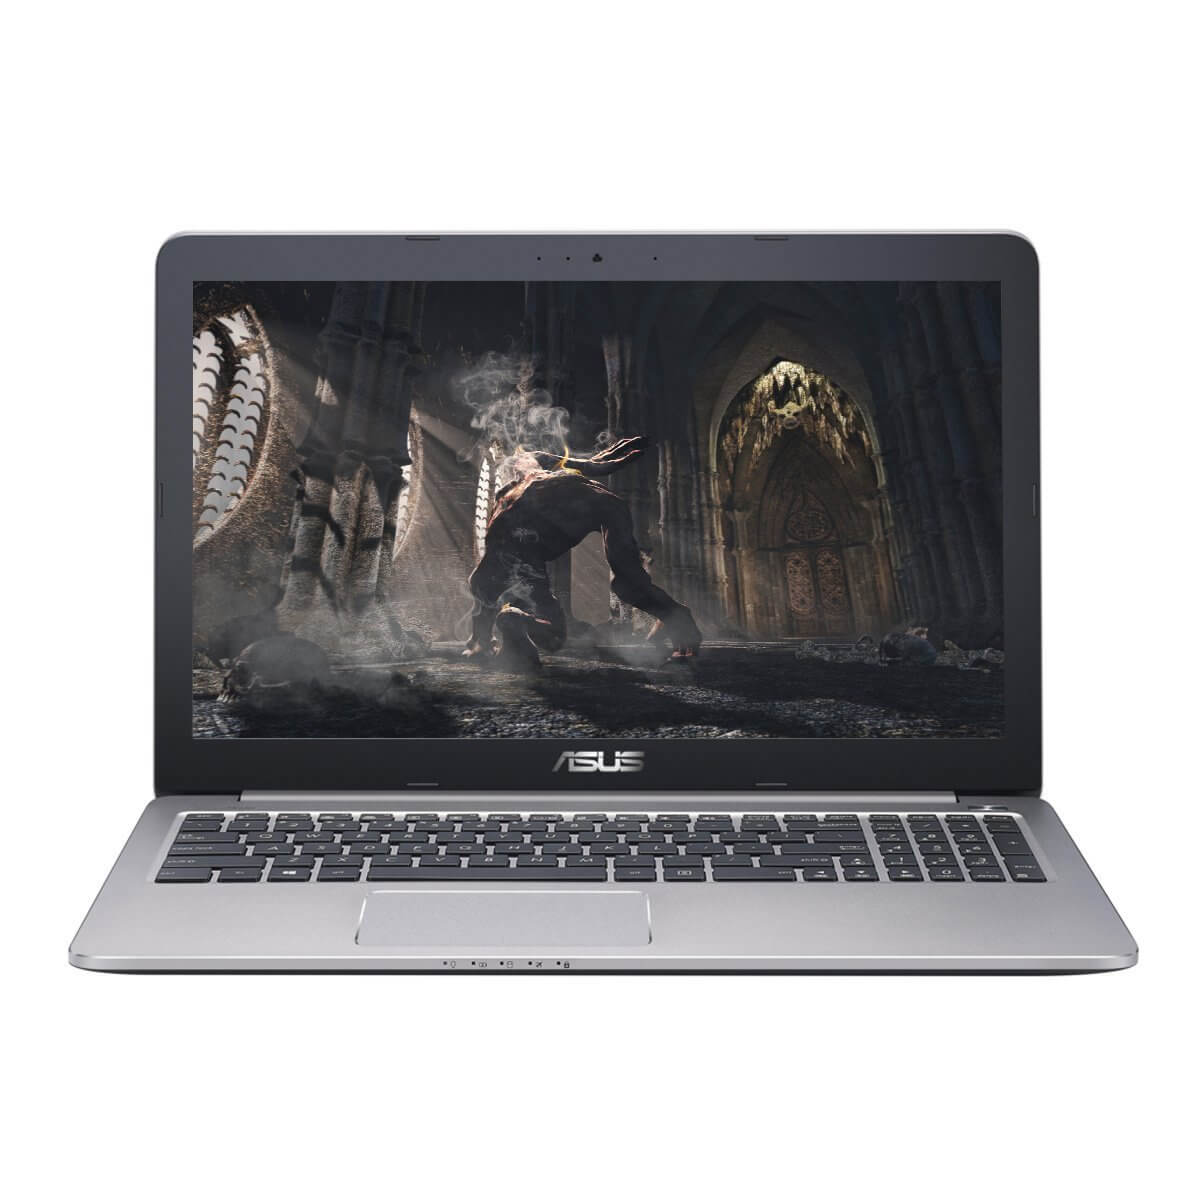 ASUS K501UW-AB78 Gaming Laptop under 1000